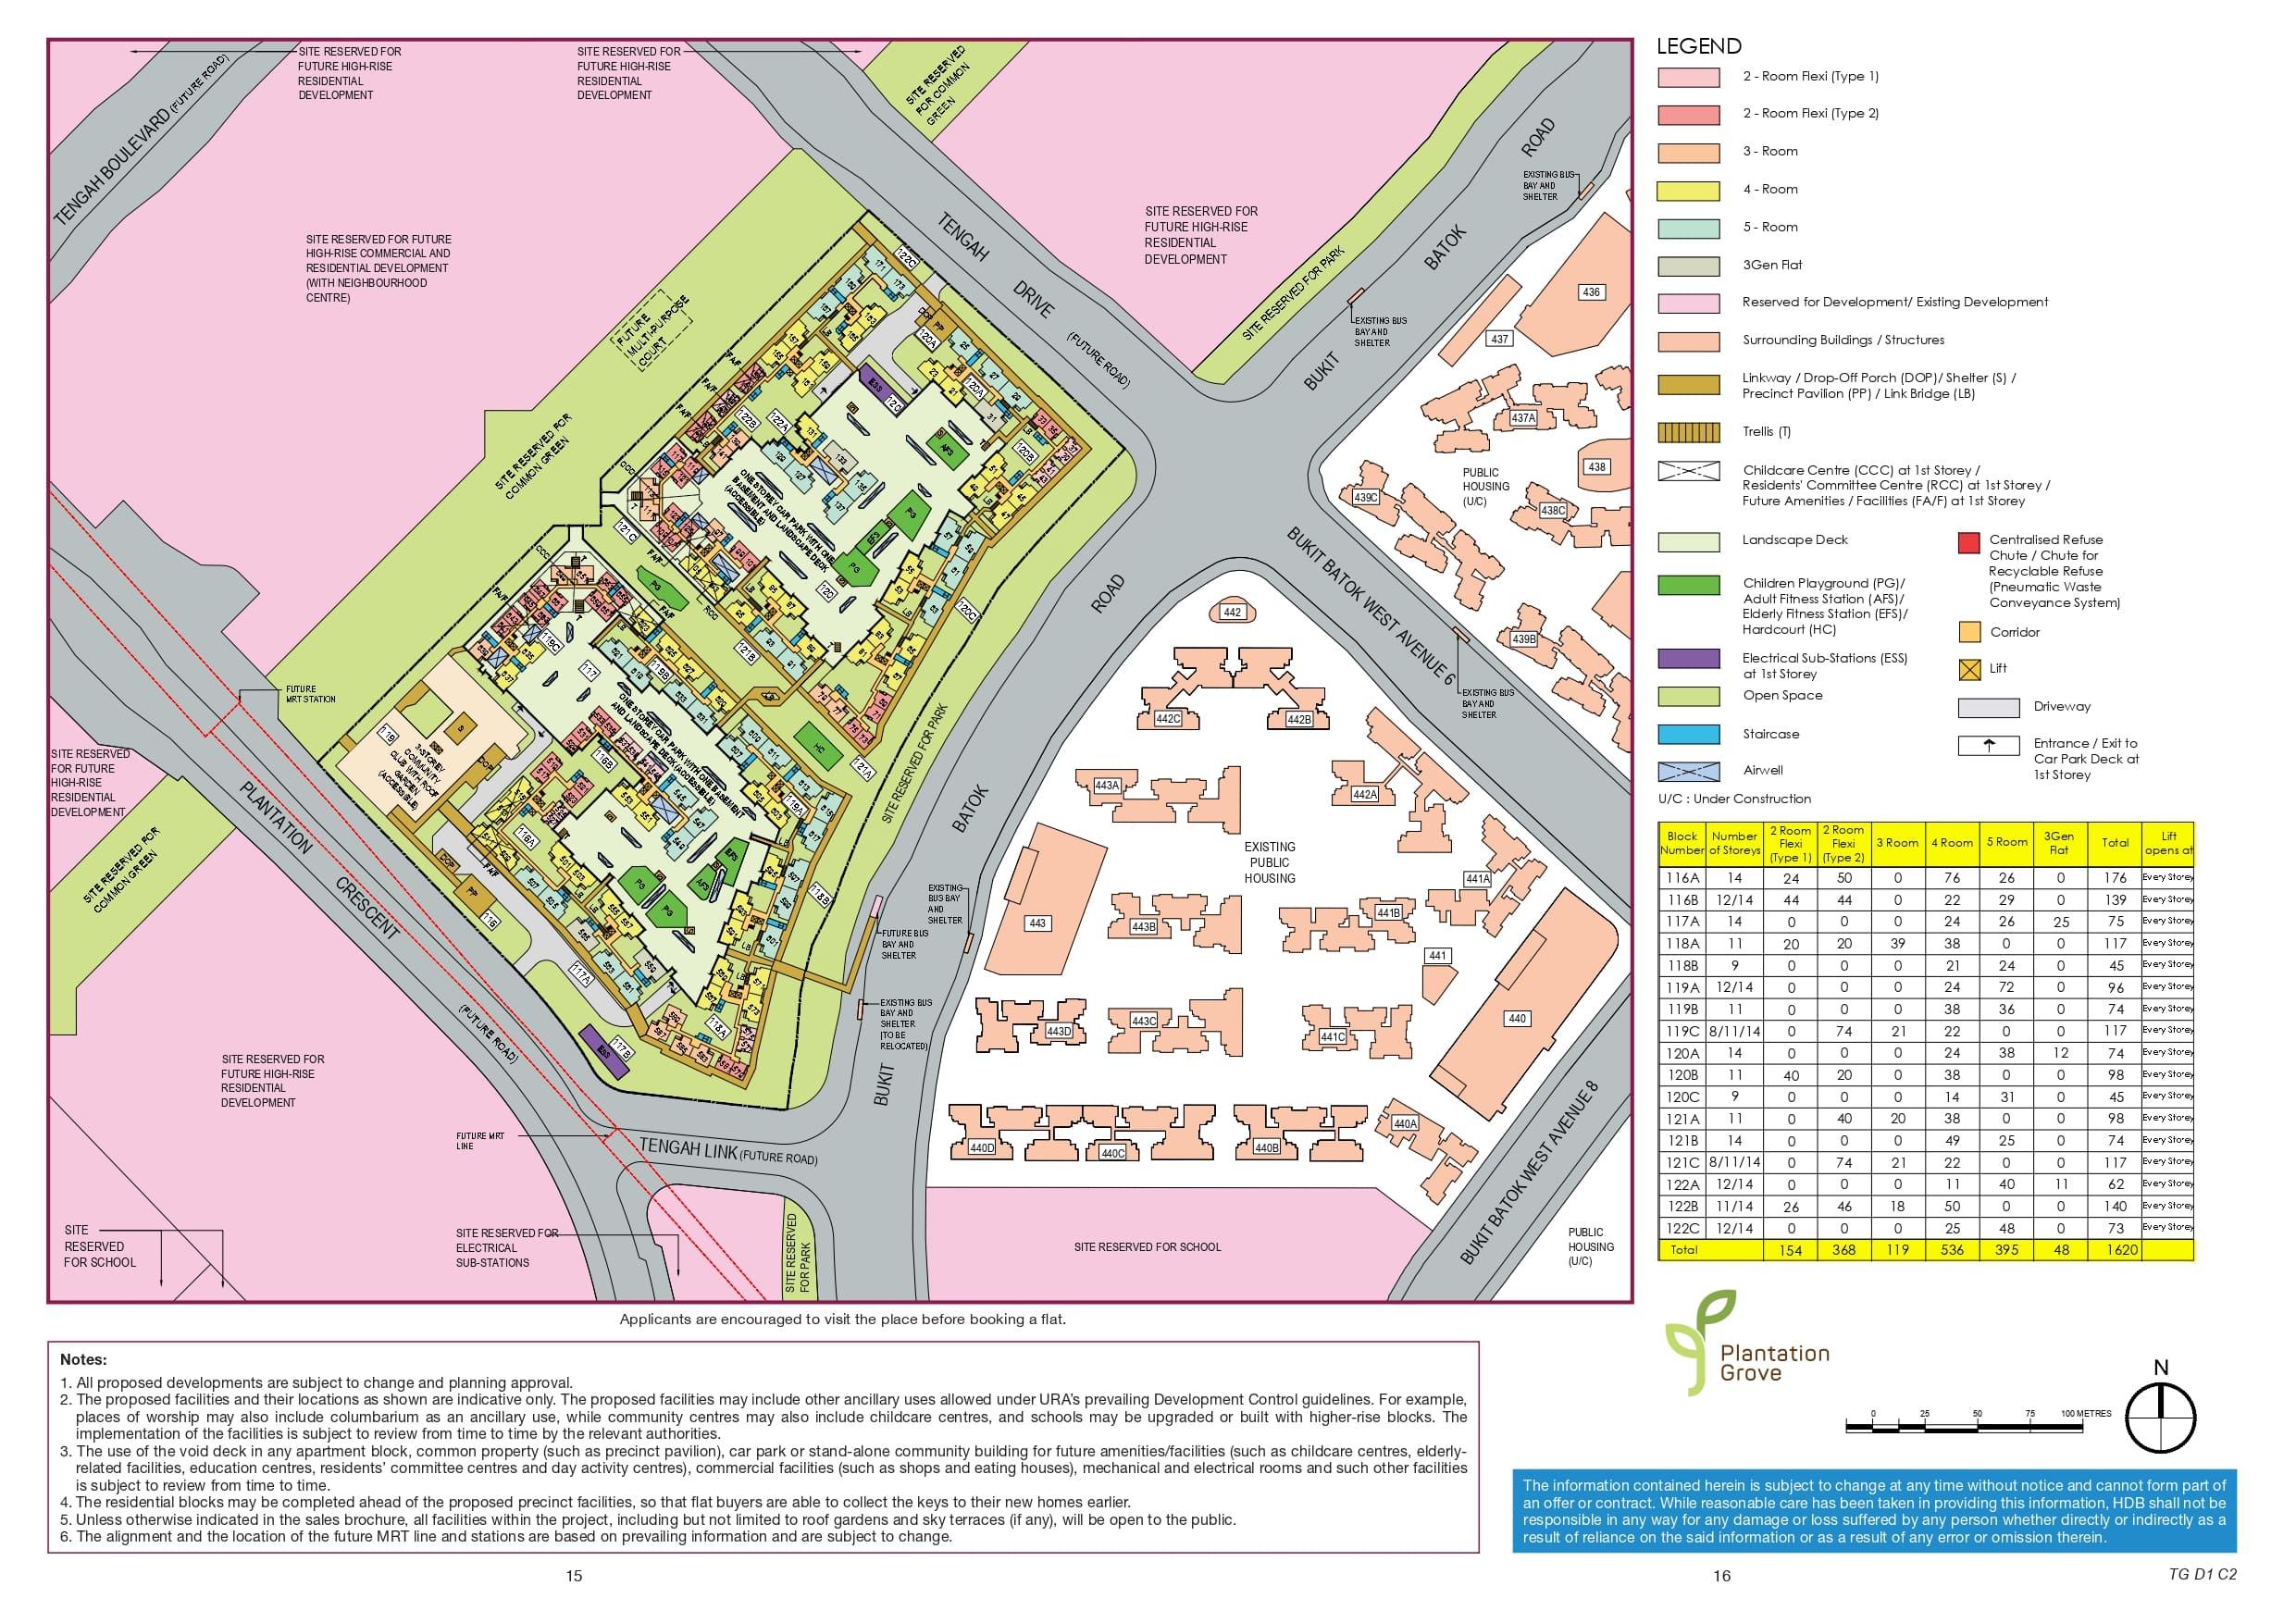 Plantation Grove site-plan